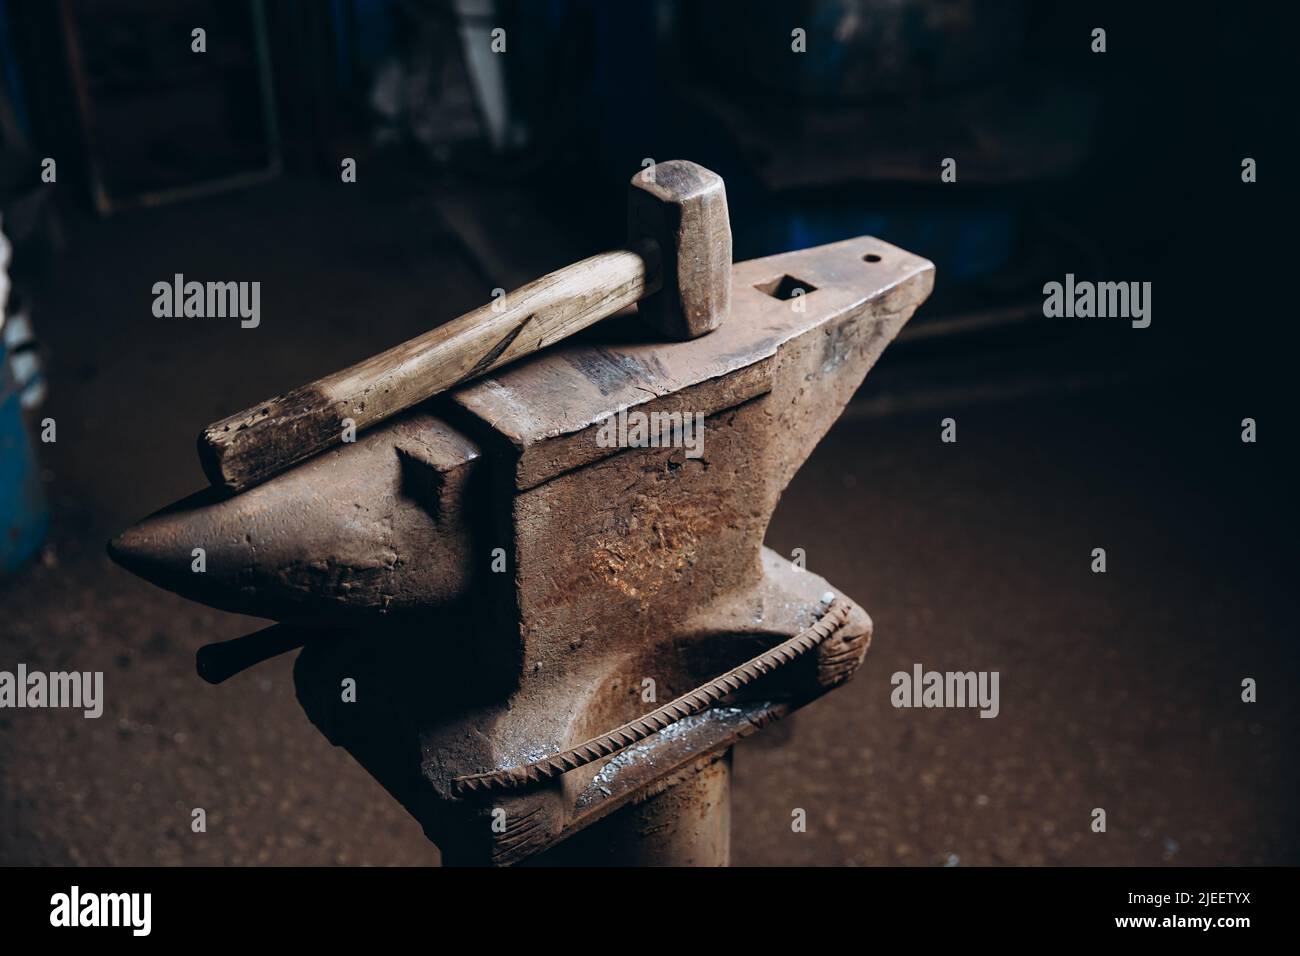 A blacksmith's hammer lies on an anvil. Stock Photo